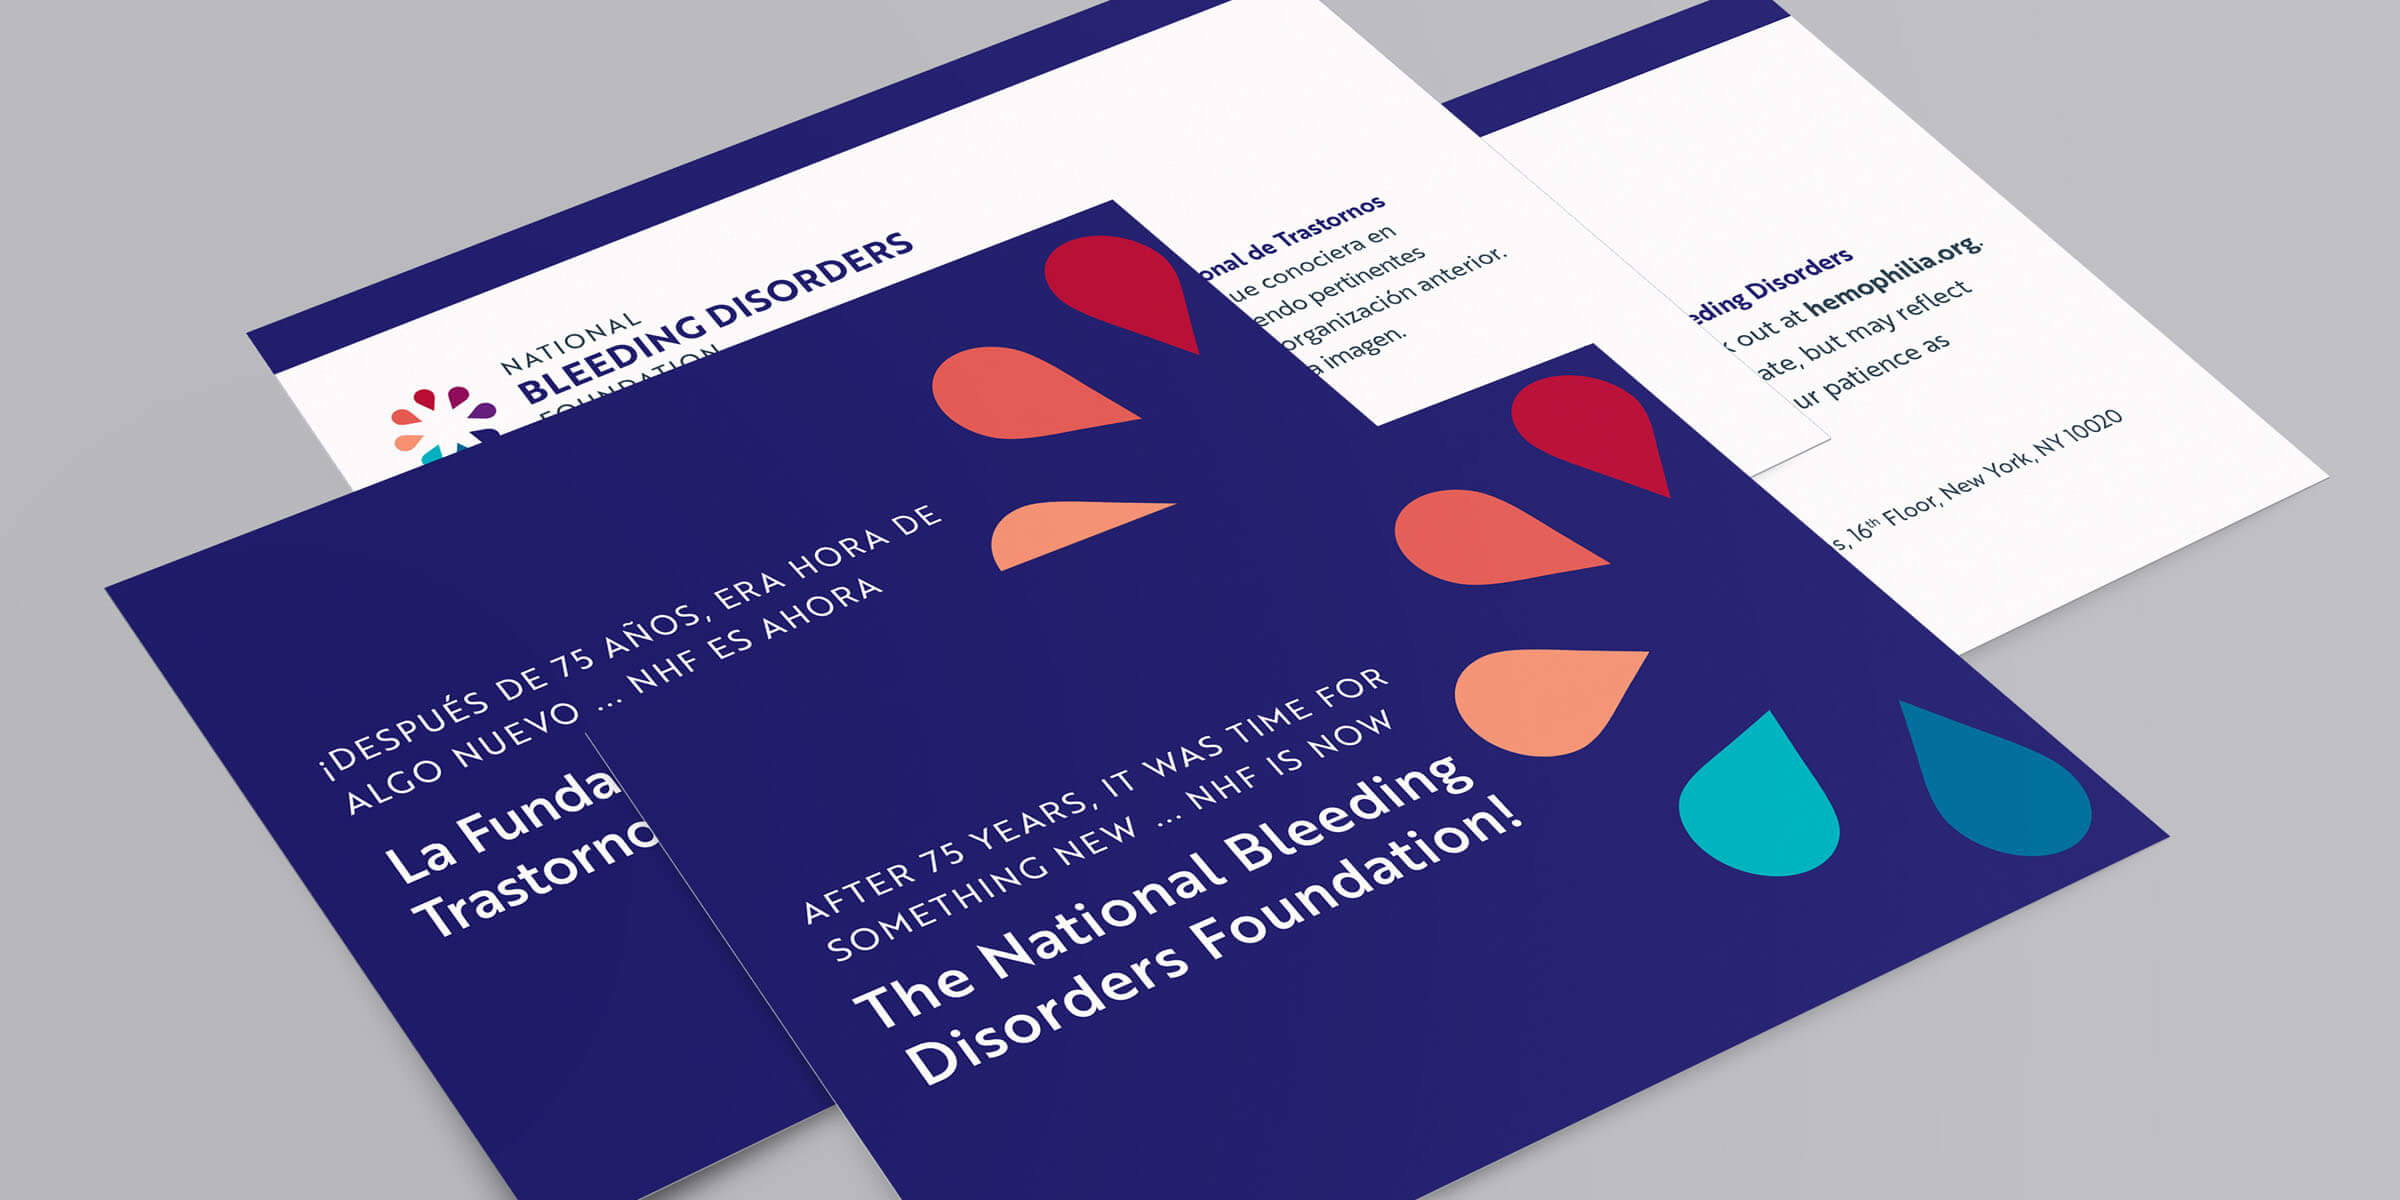 Rebranding a nonprofit organization the National Bleeding Disorders Foundation